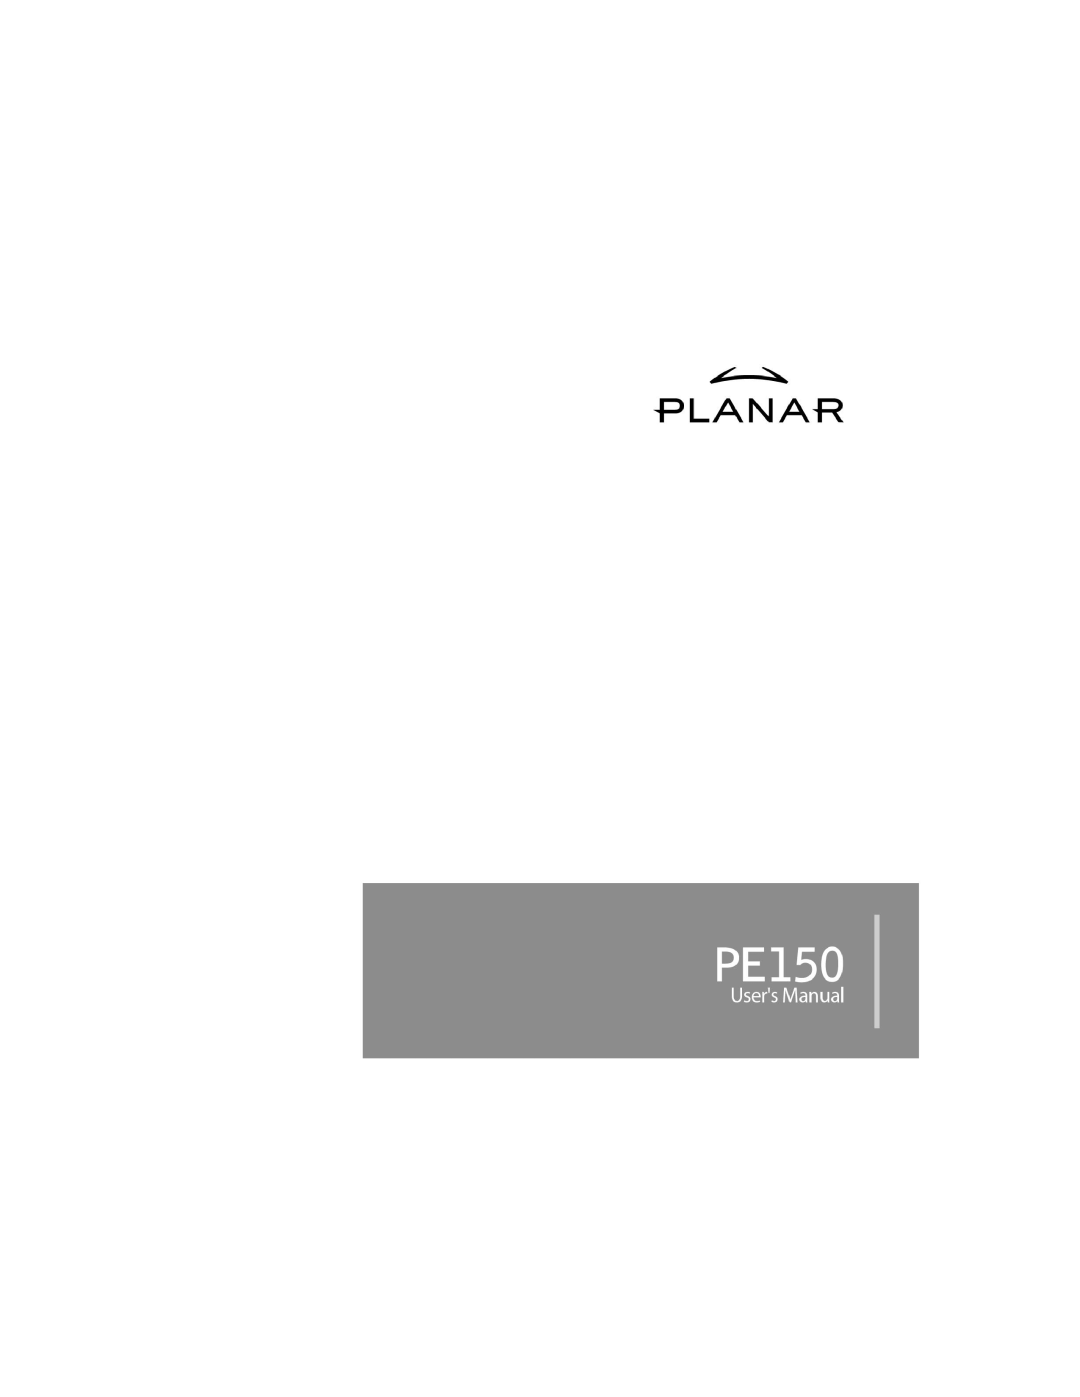 Planar PE150 manual 